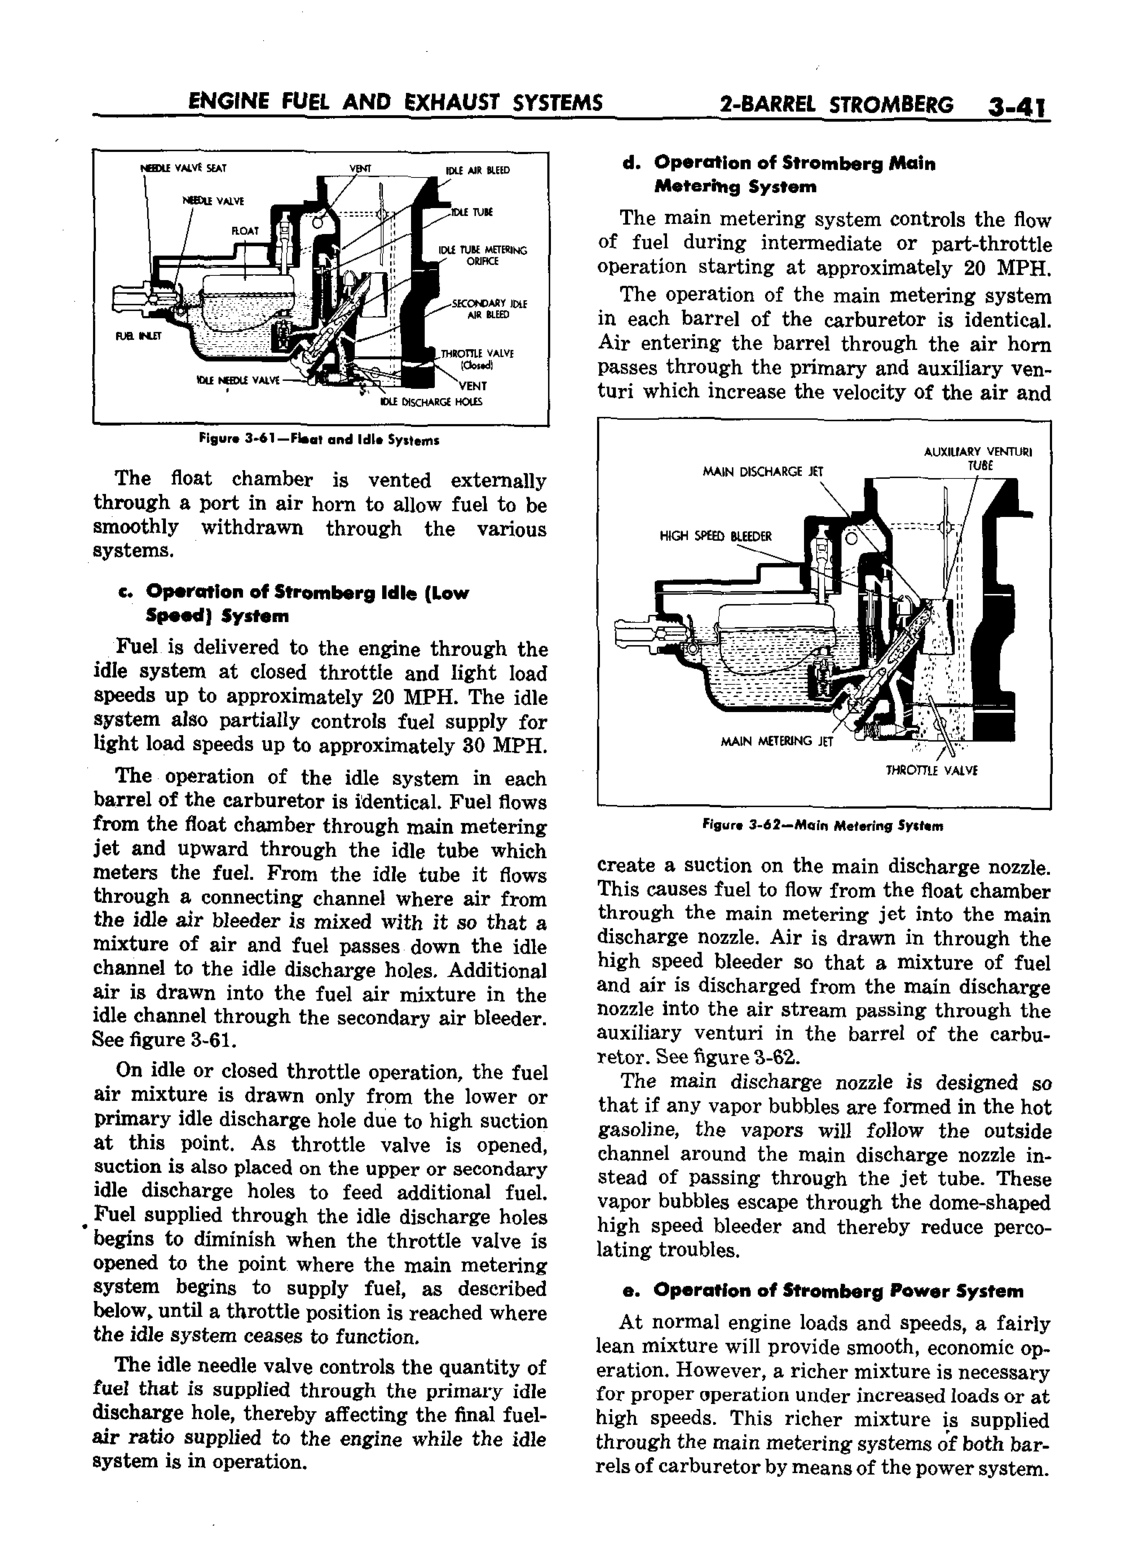 n_04 1959 Buick Shop Manual - Engine Fuel & Exhaust-041-041.jpg